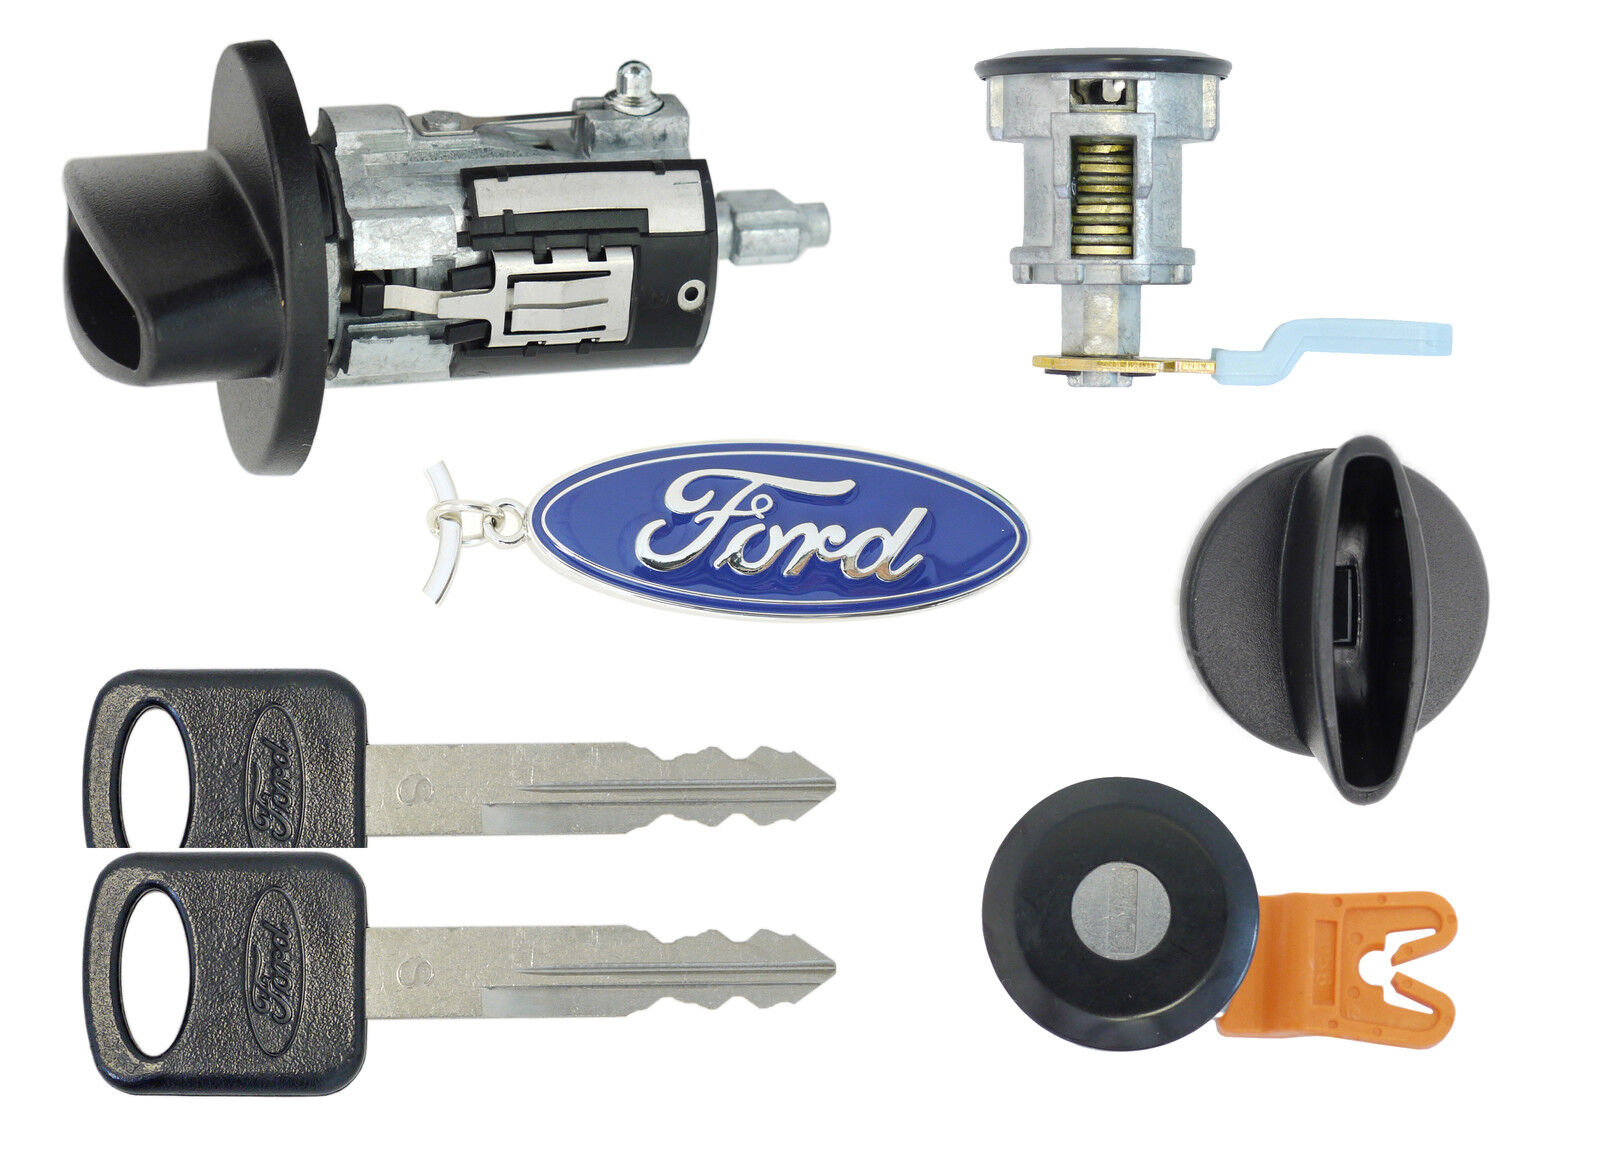 Ford RANGER 1997-2007 P/U - Ignition & (Black) Door Lock Cylinders with 2 Keys